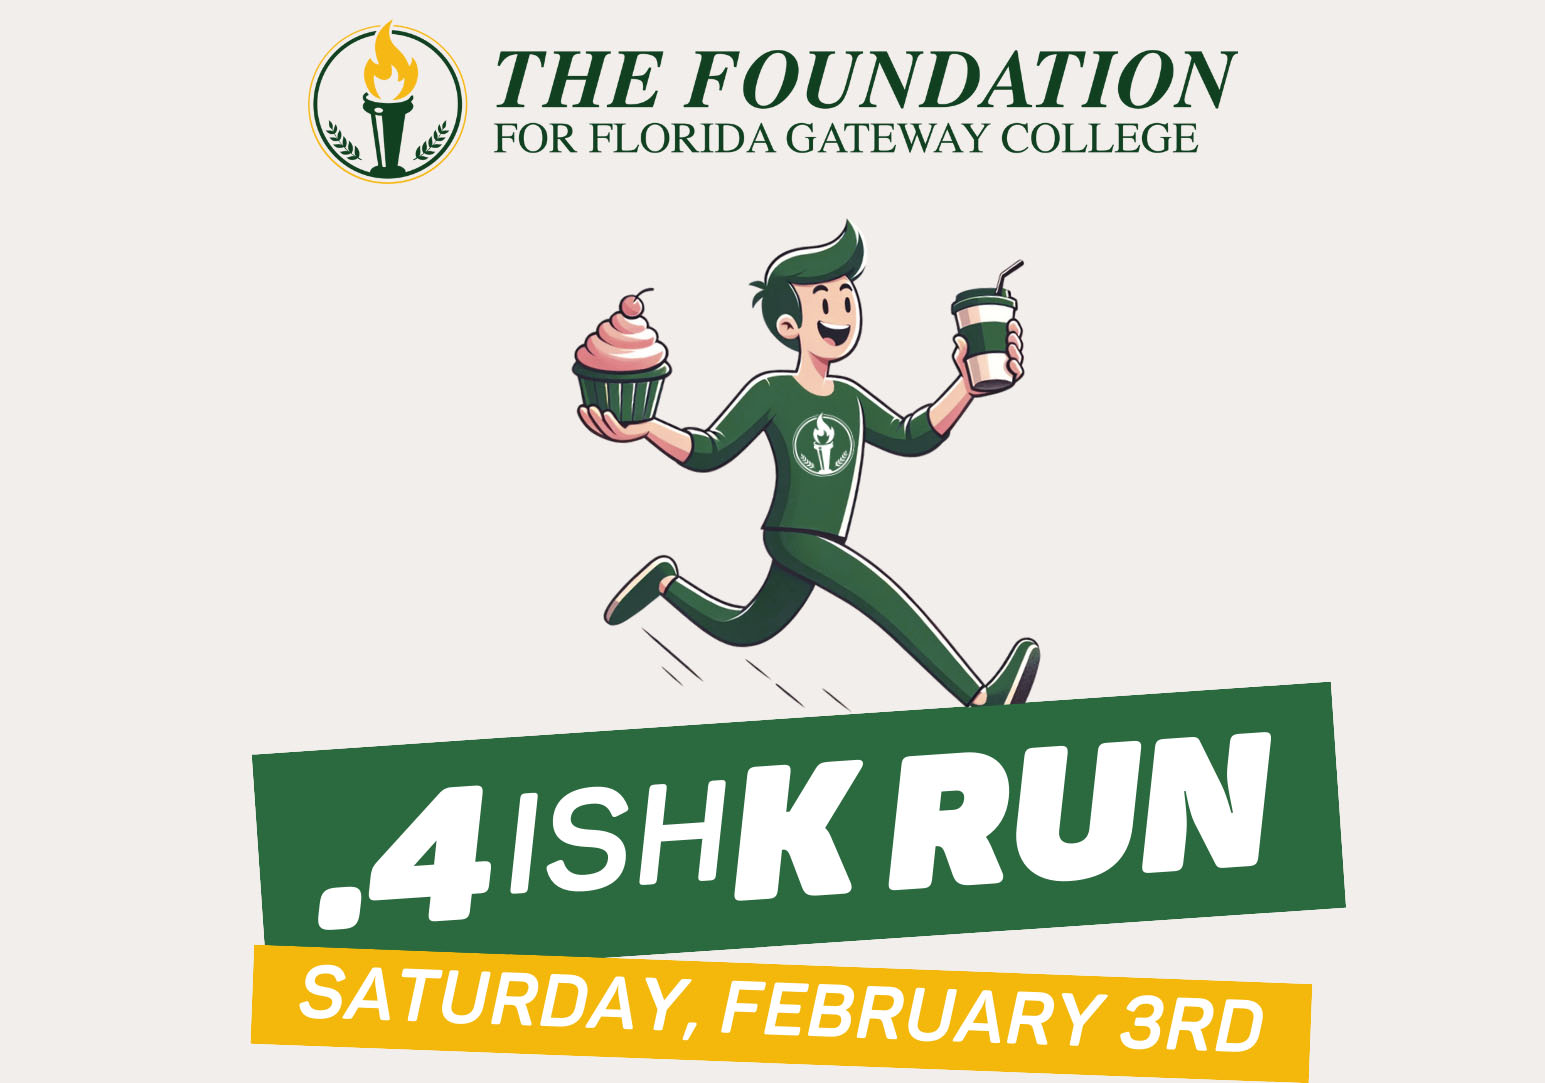 FGC Foundation to Hold “.4ishK Run” Fundraiser